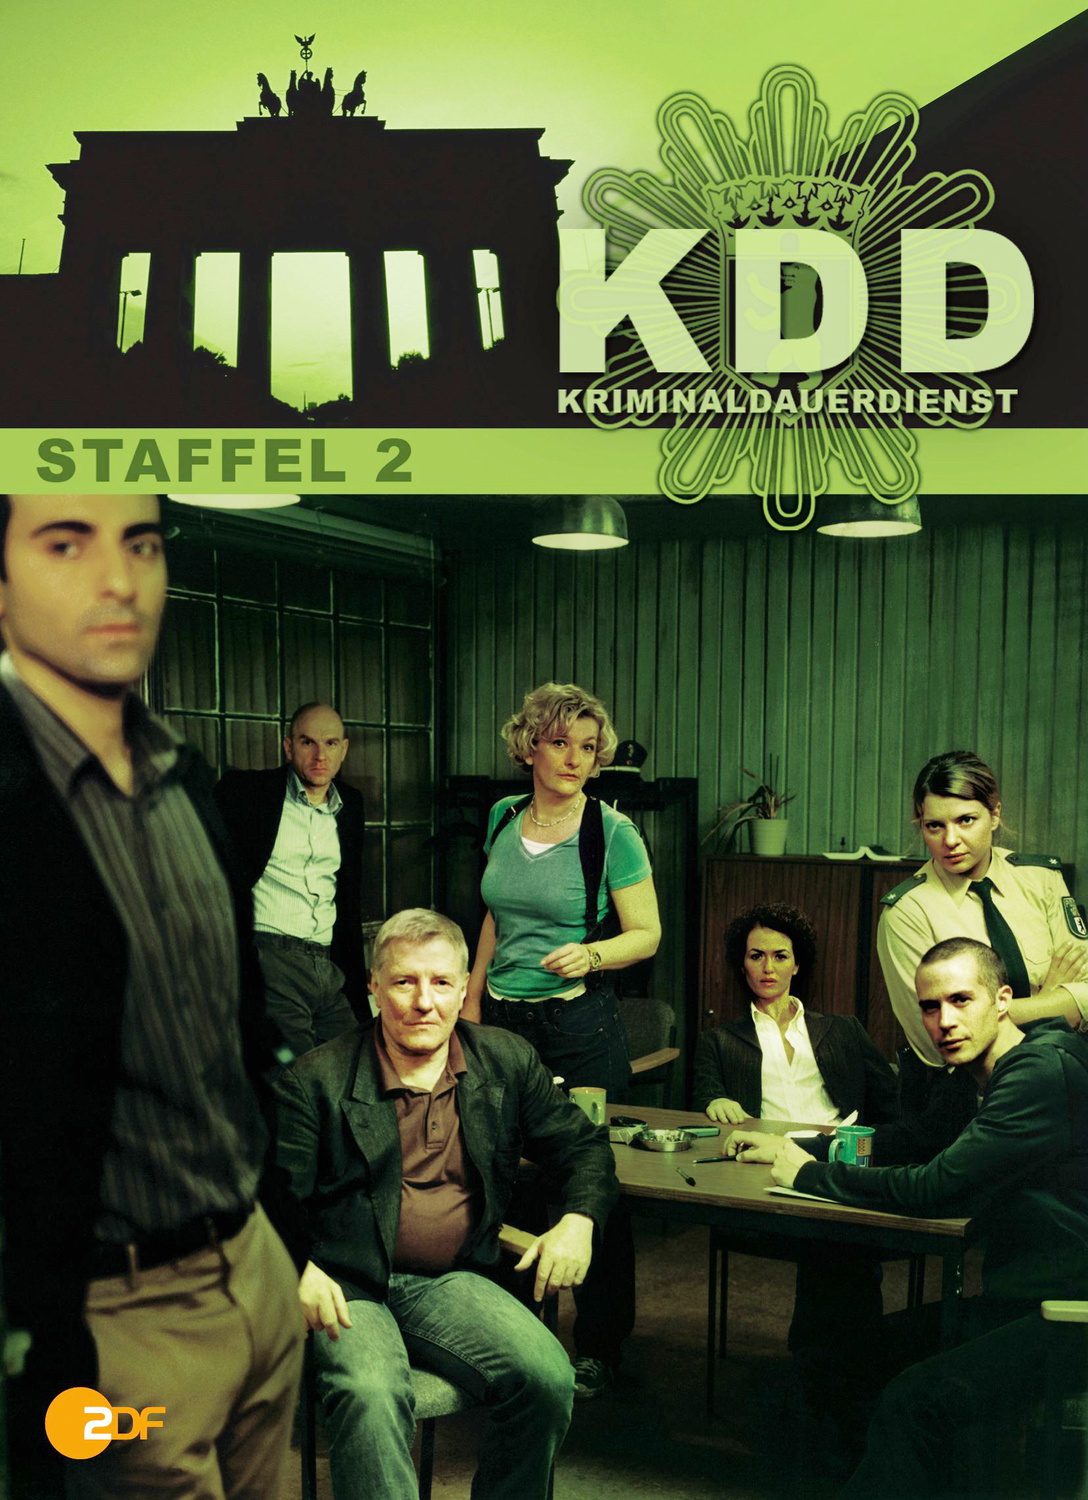 kdd-kriminaldauerdienst-staffel-2-4-dvds-edward-berger-andreas